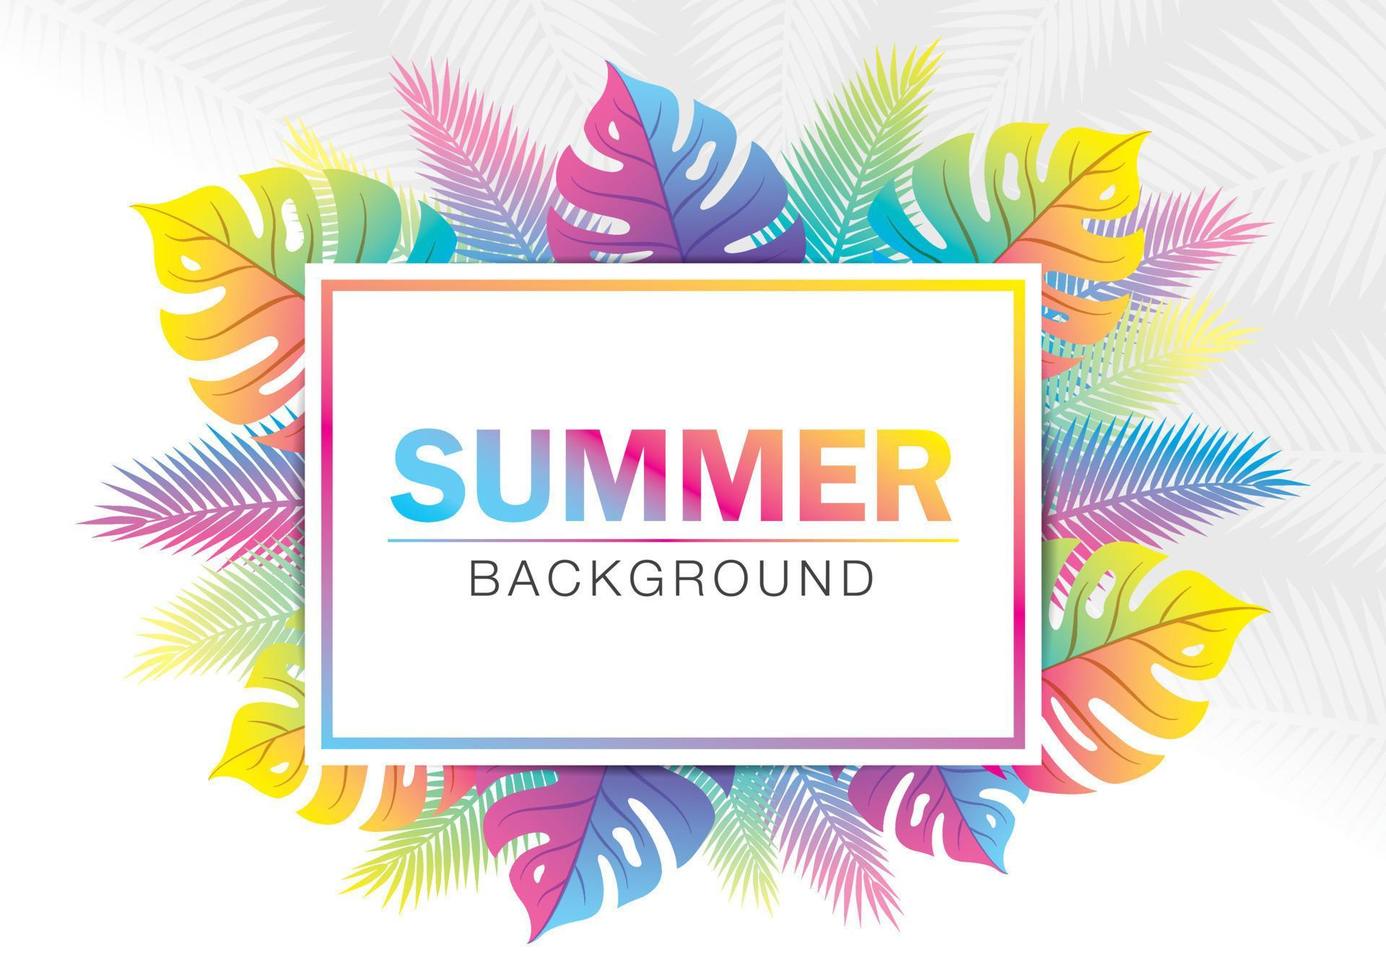 marco rectangular con vector gráfico de hojas coloridas en un divertido estilo de verano tropical para poner tu texto.